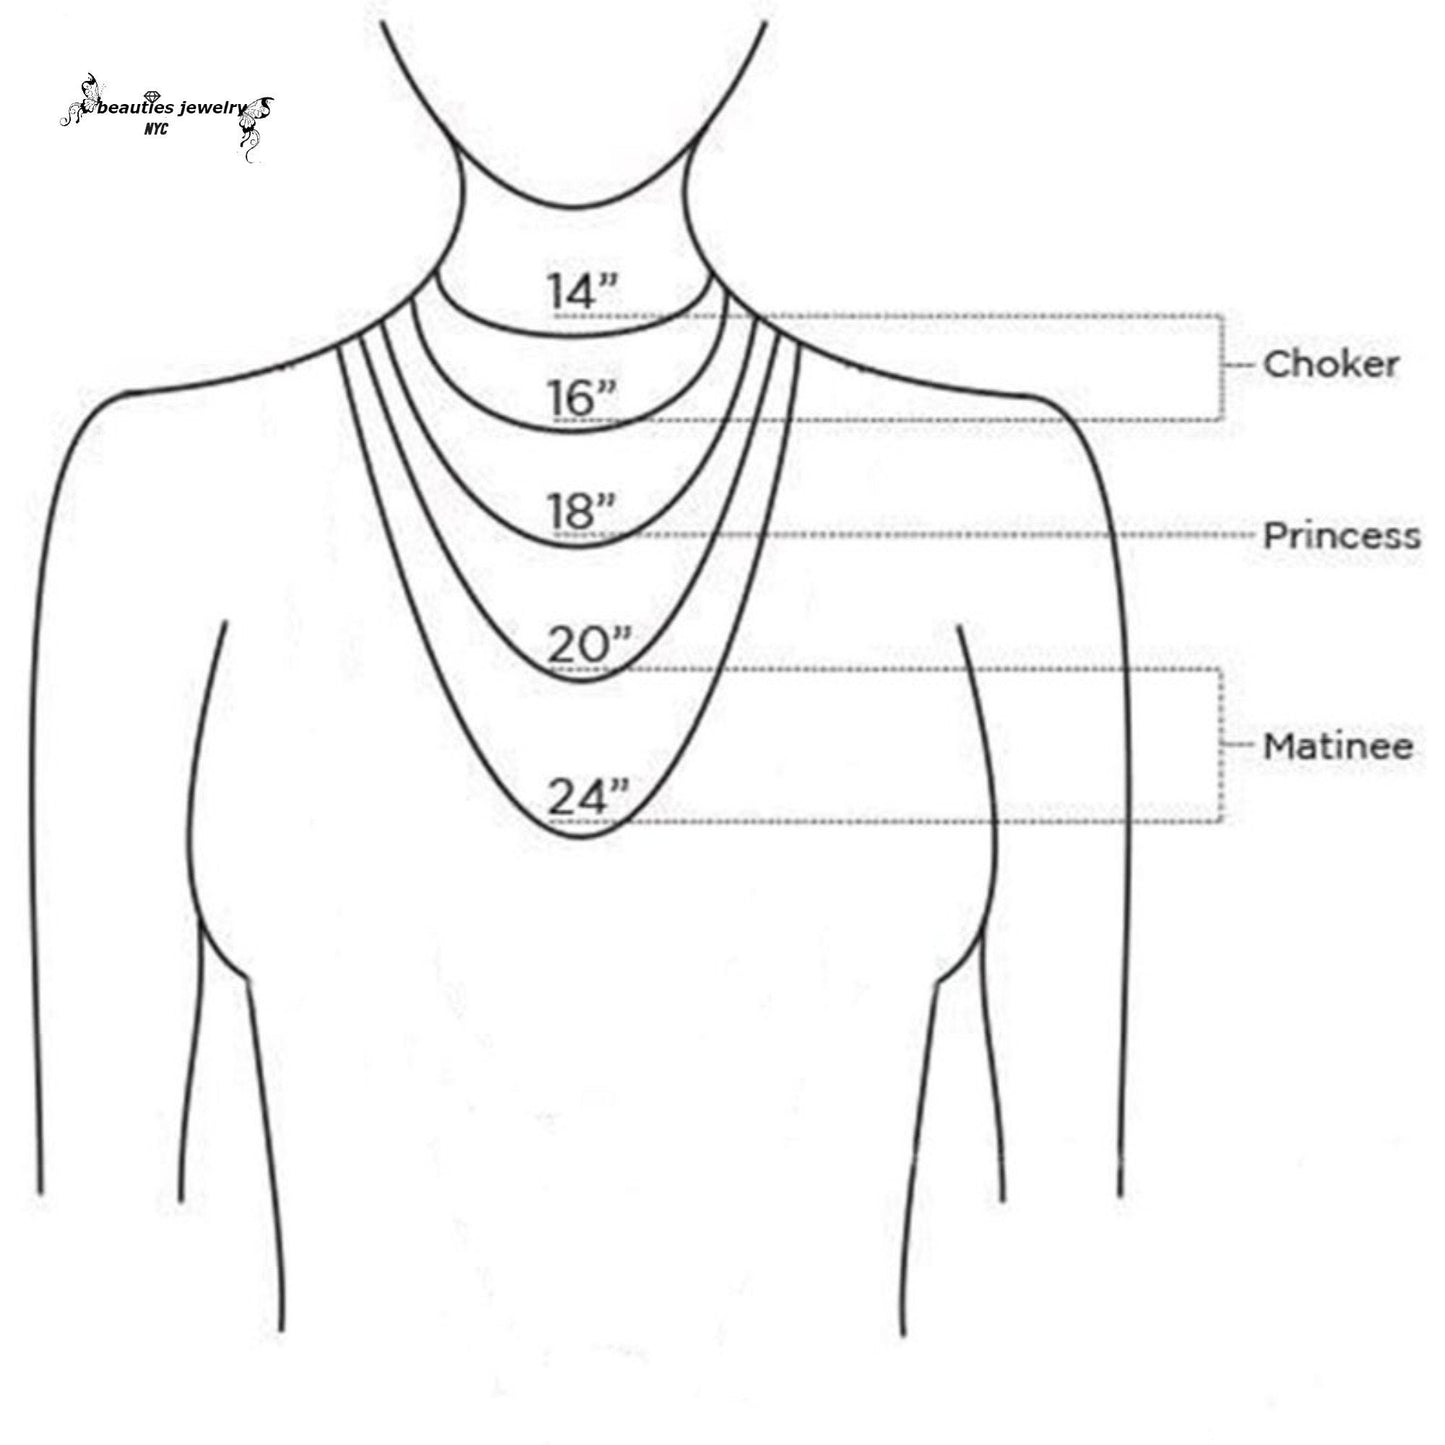 Diamond Necklace, Blue Sapphire  Necklace, Rose Gold Necklace, Charm Necklace, Necklace for Women, Dainty Necklace, Diamond Pendant